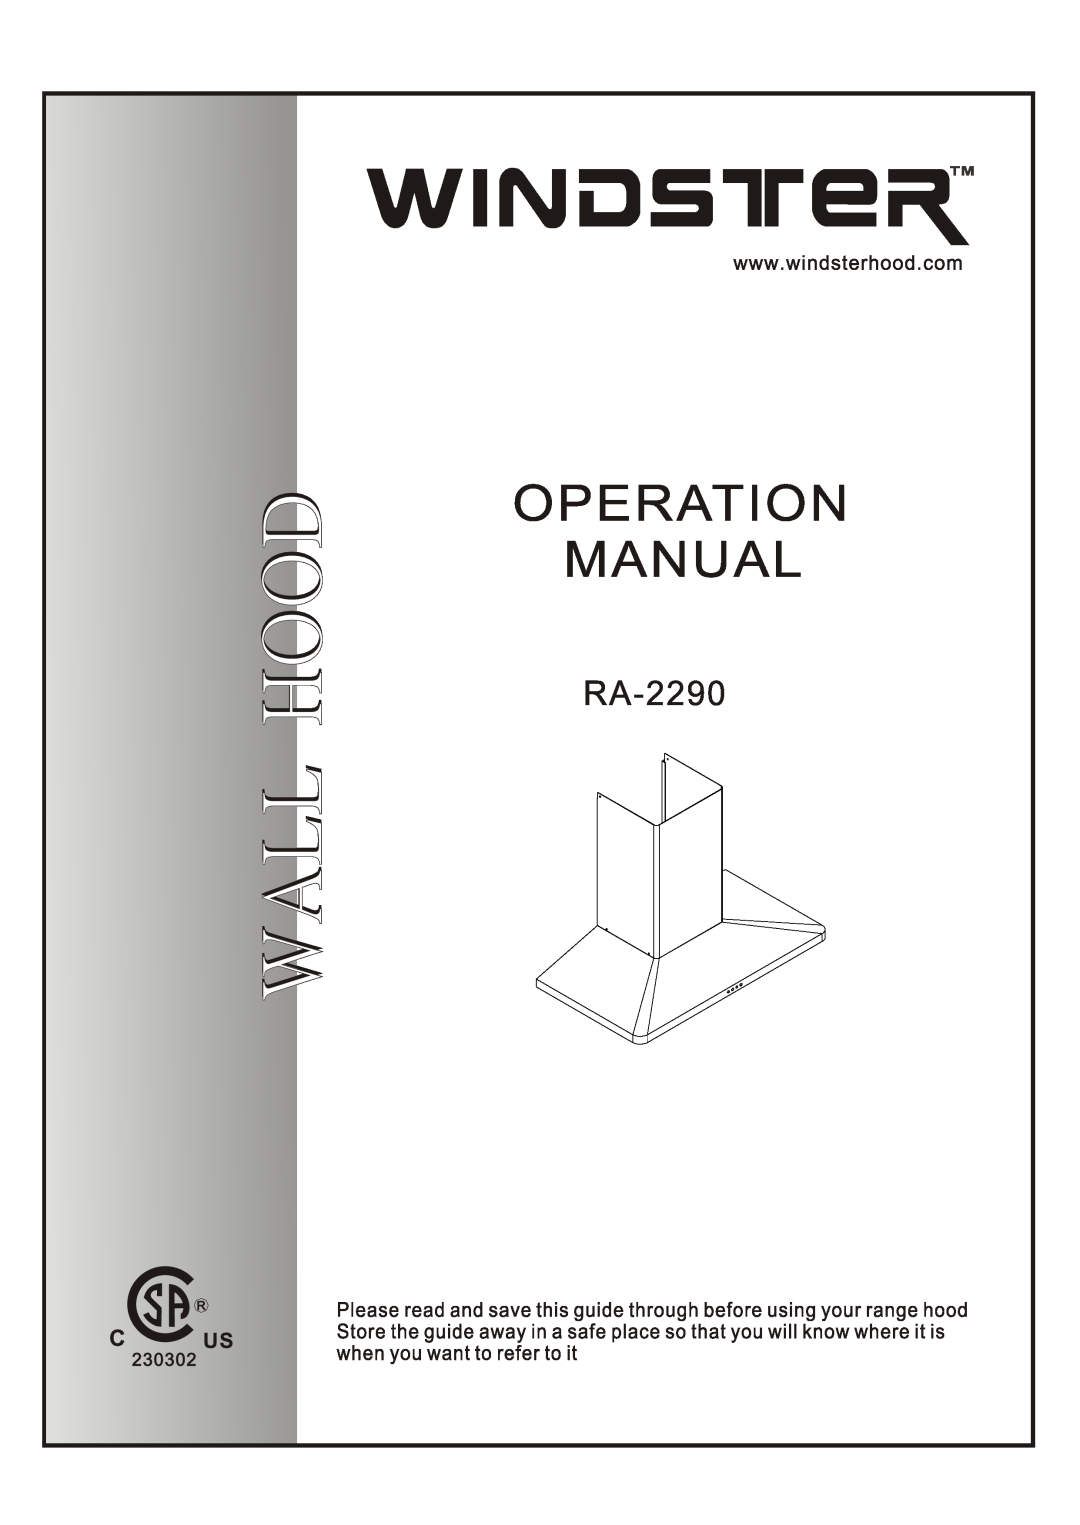 Windster RA-2290 manual 